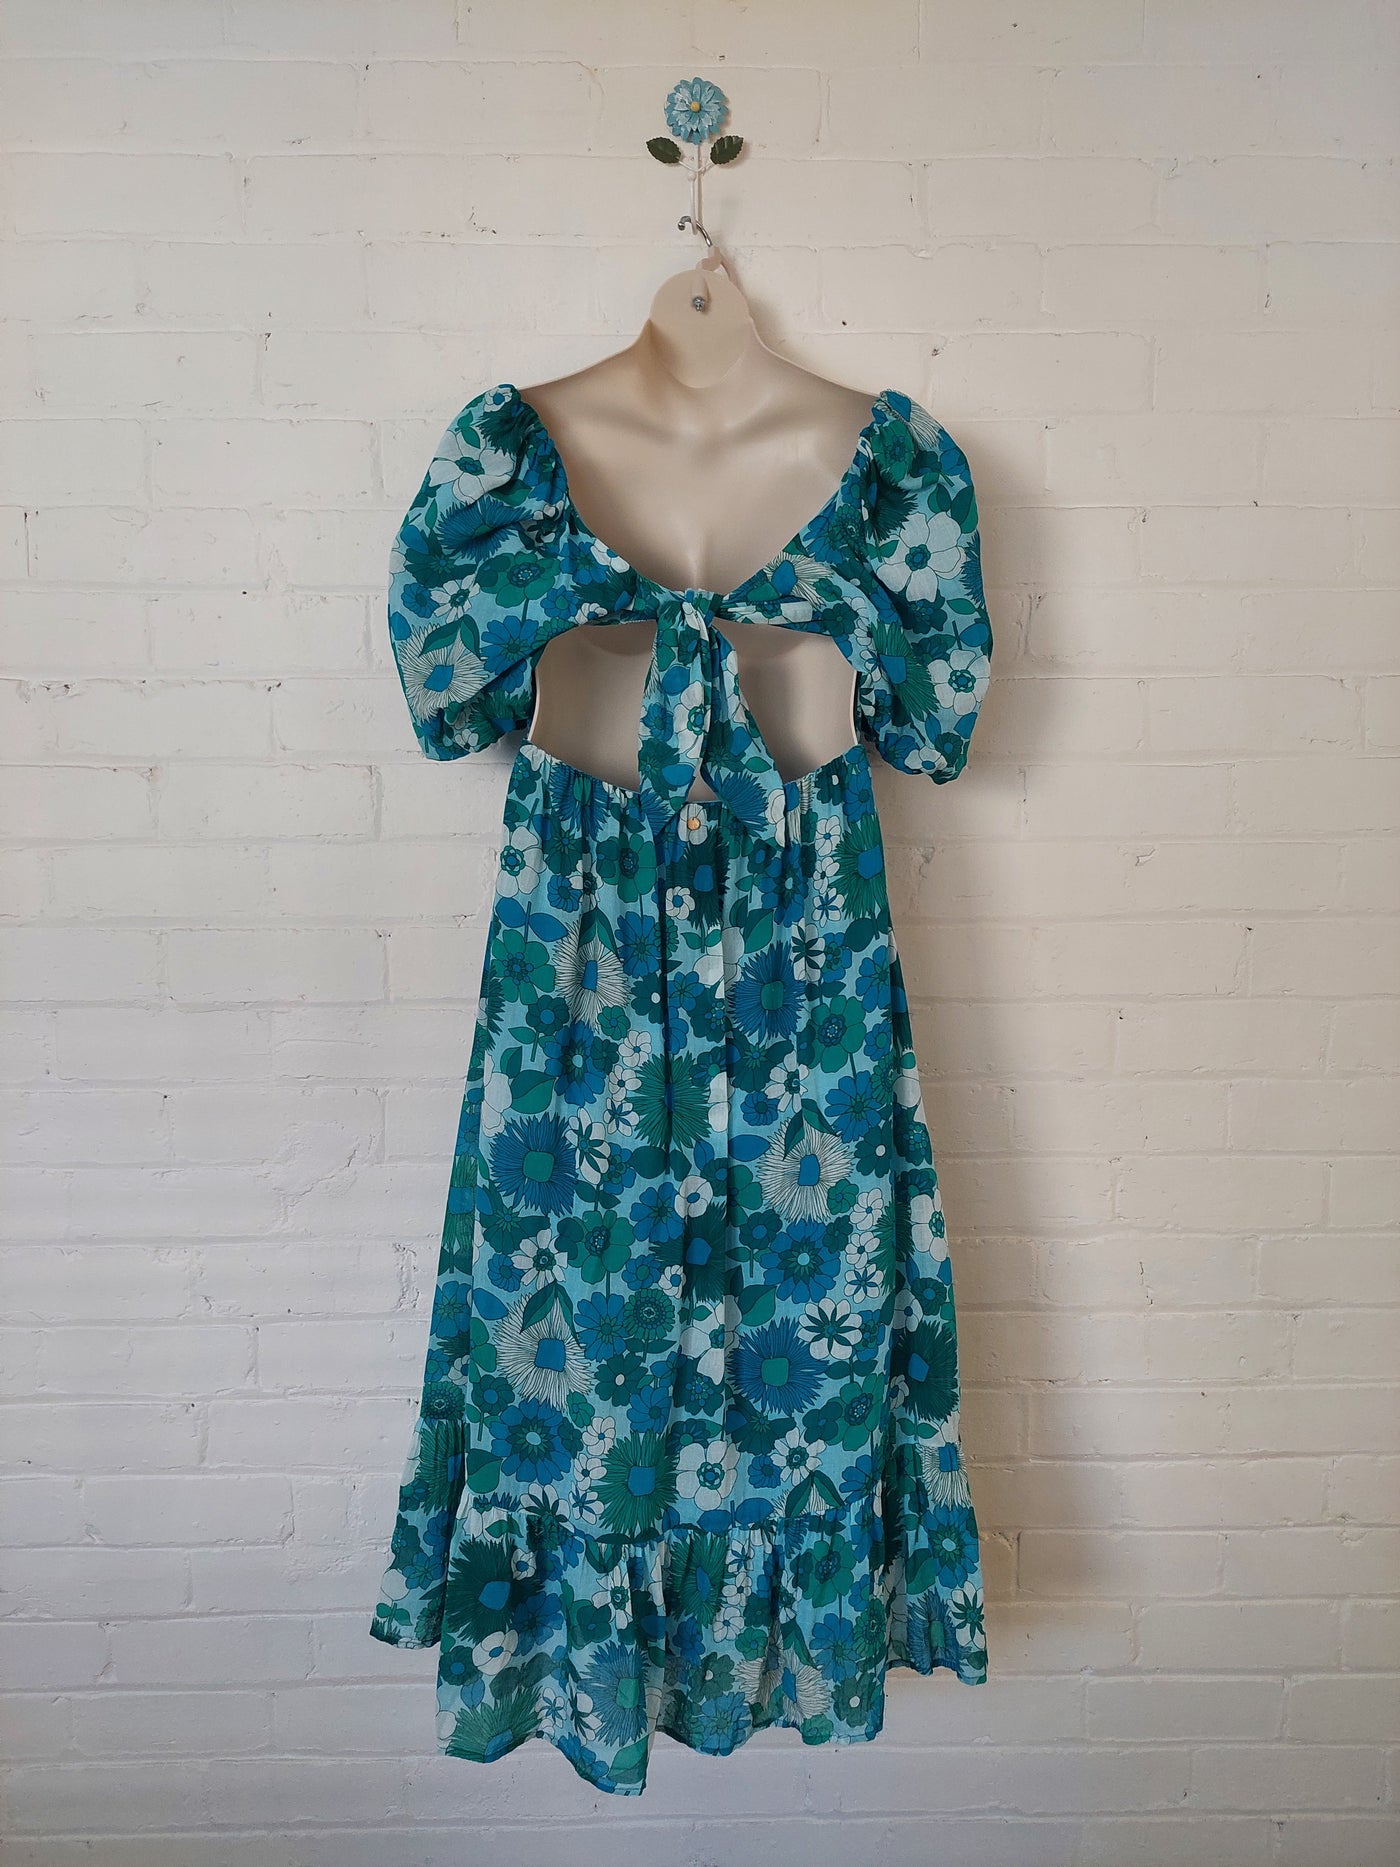 Antik Batik Lorette Lagoon Cotton Maxi Dress, Size L/42 (AU 14 / US 10)